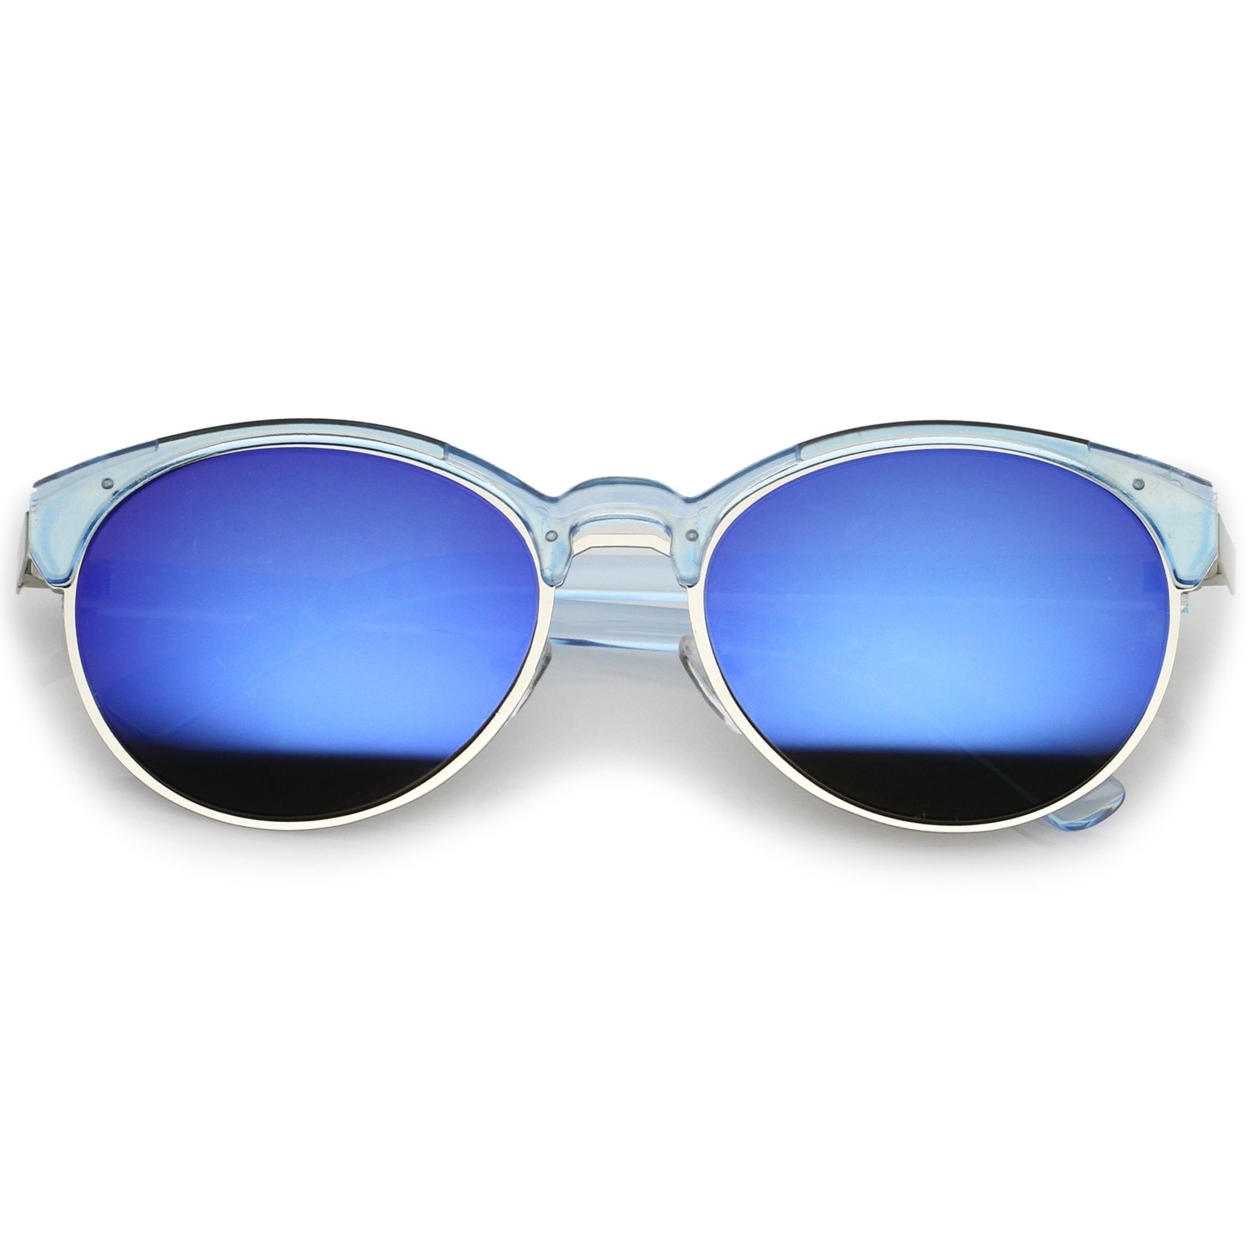 Double Nose Bridge Metal Trim Mirror Lens Round Cat Eye Sunglasses 55mm - Black-Silver / Green Mirror